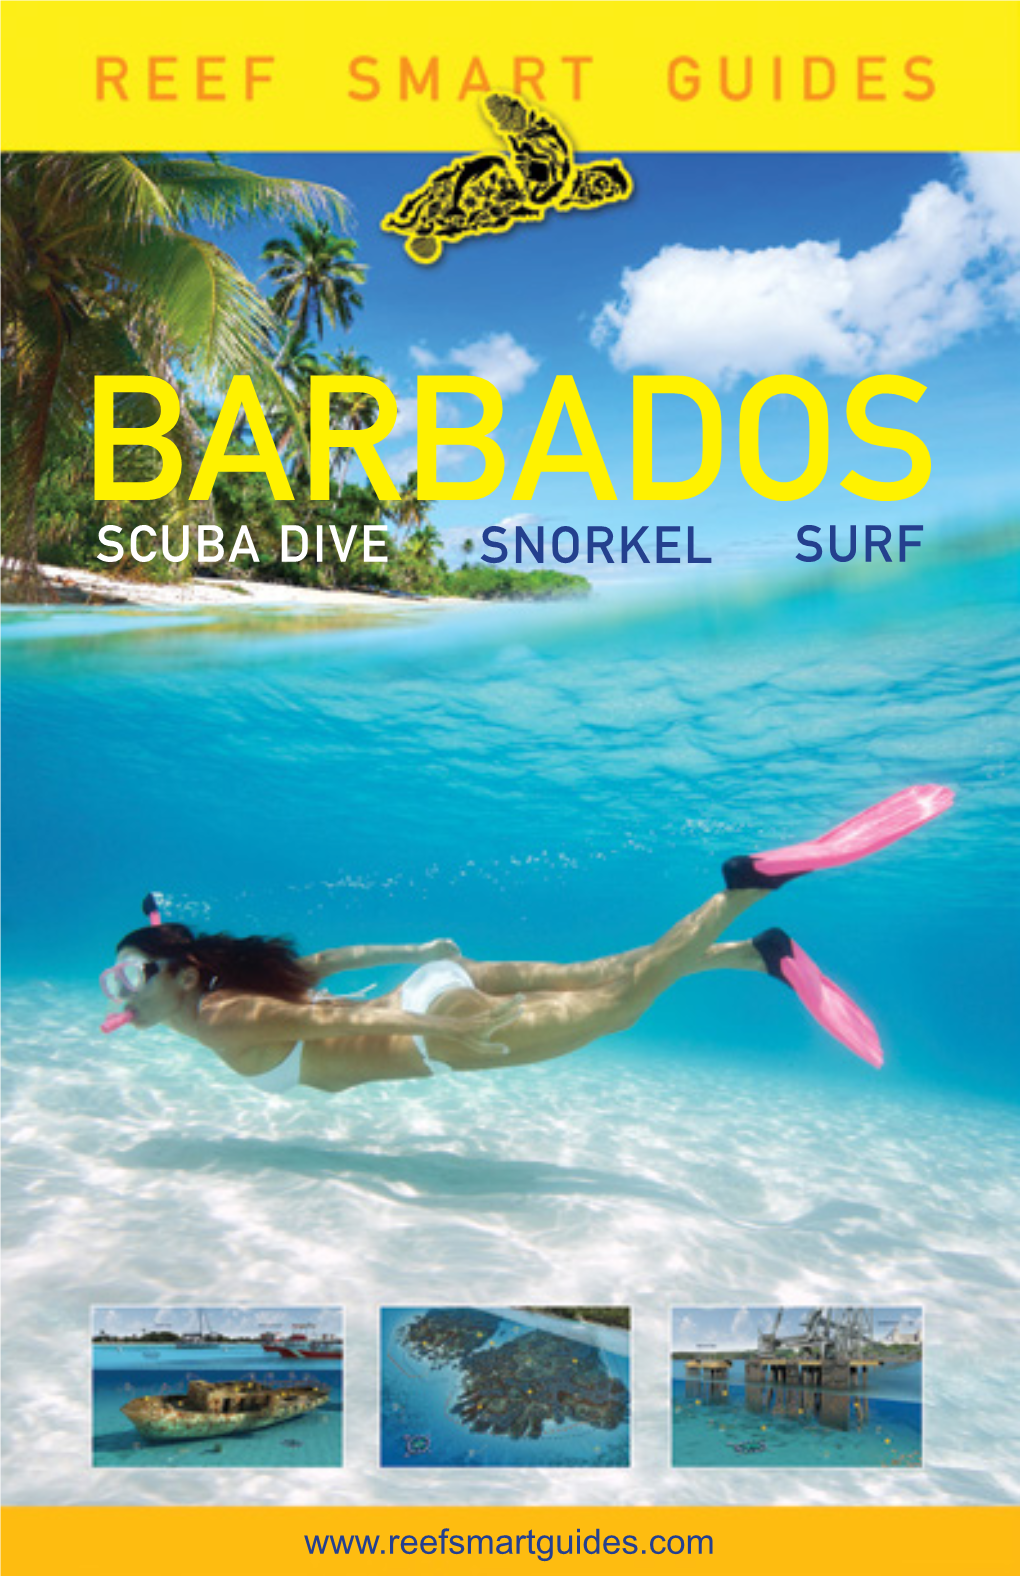 Barbados Guidebook Sample